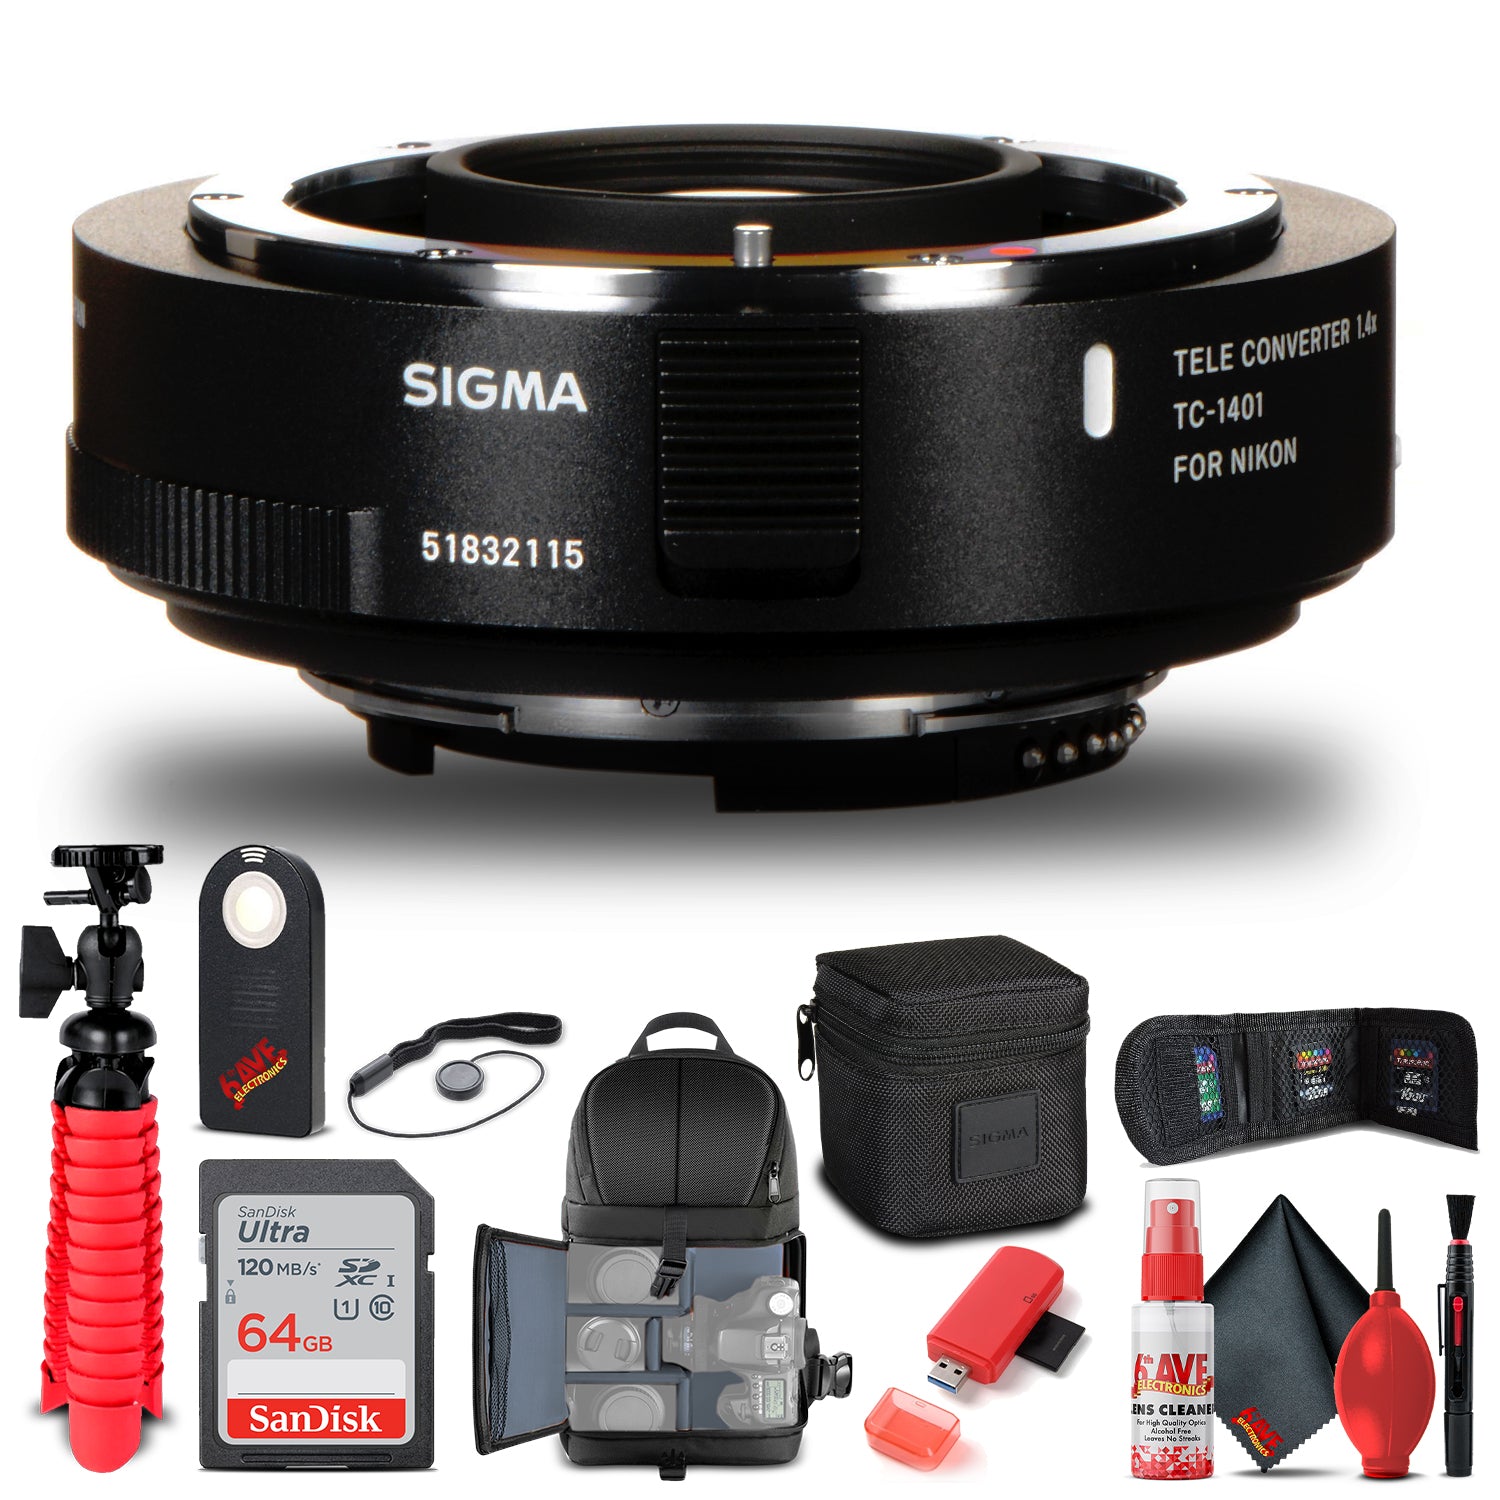 Sigma TC-1401 1.4x Teleconverter for Nikon F (879306) Bundle